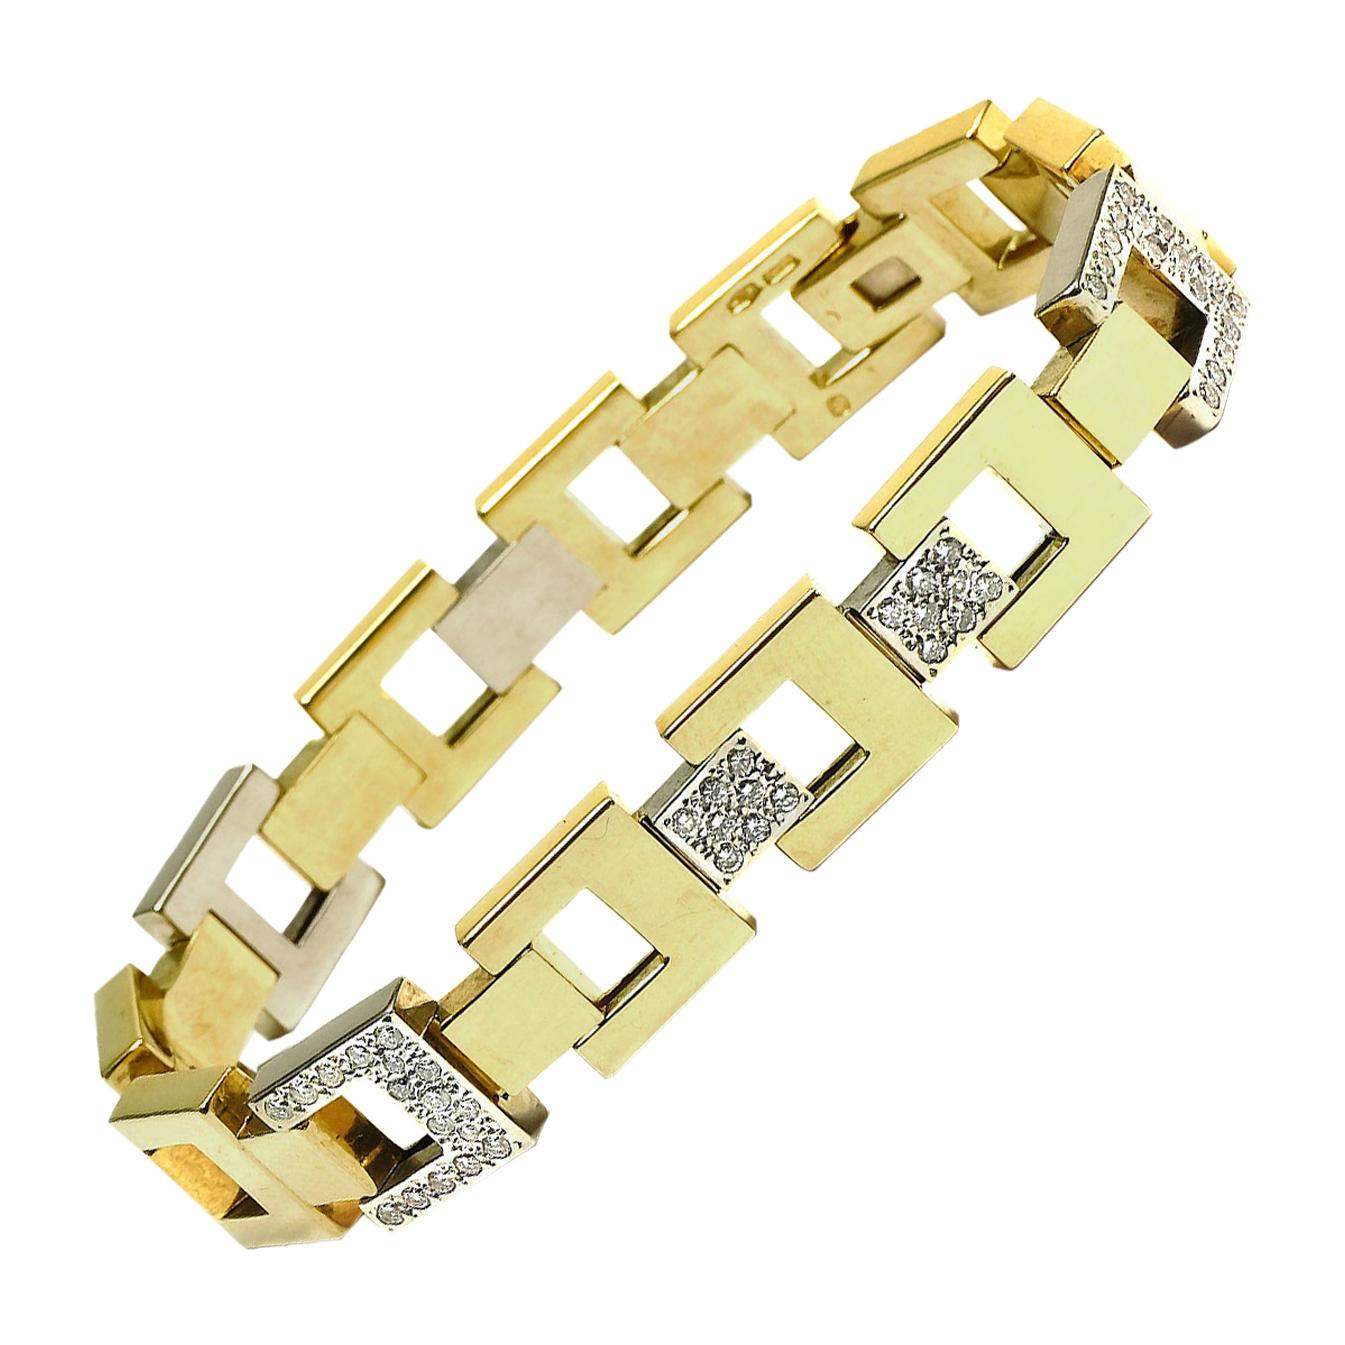 Pomellato Diamond Square Link Bracelet in 18 Karat Yellow and White Gold